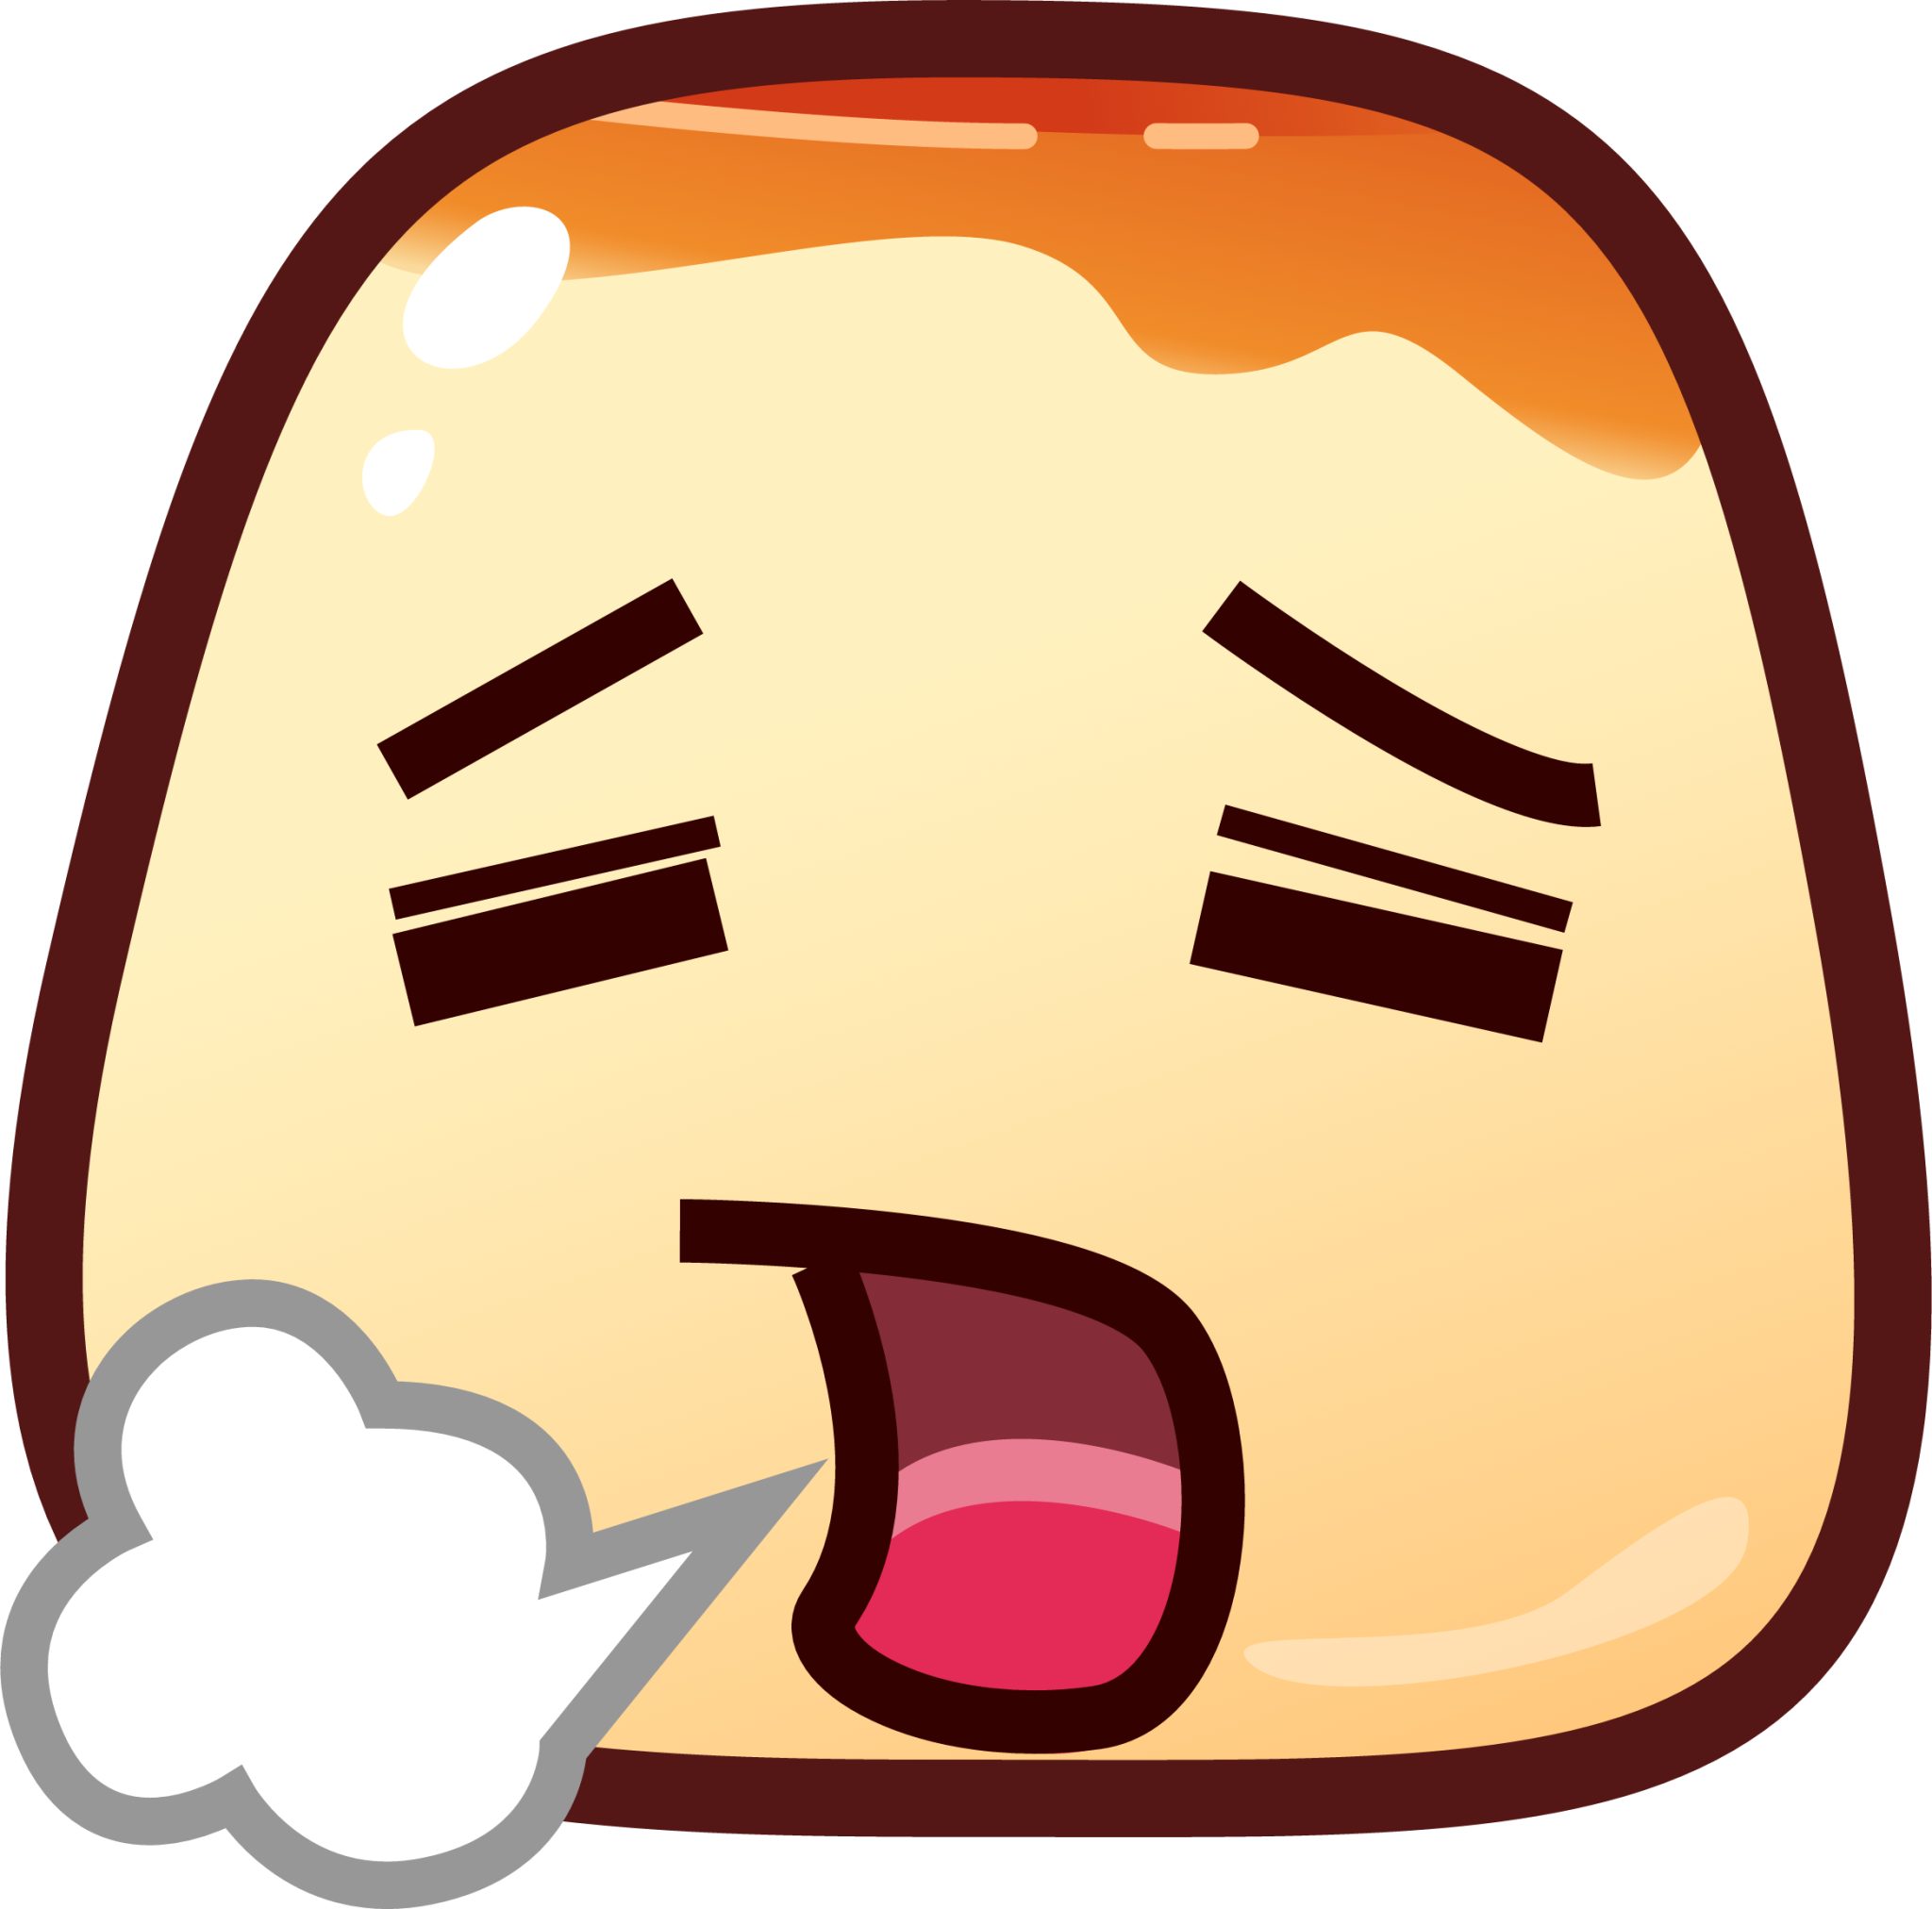 relieved (pudding) emoji